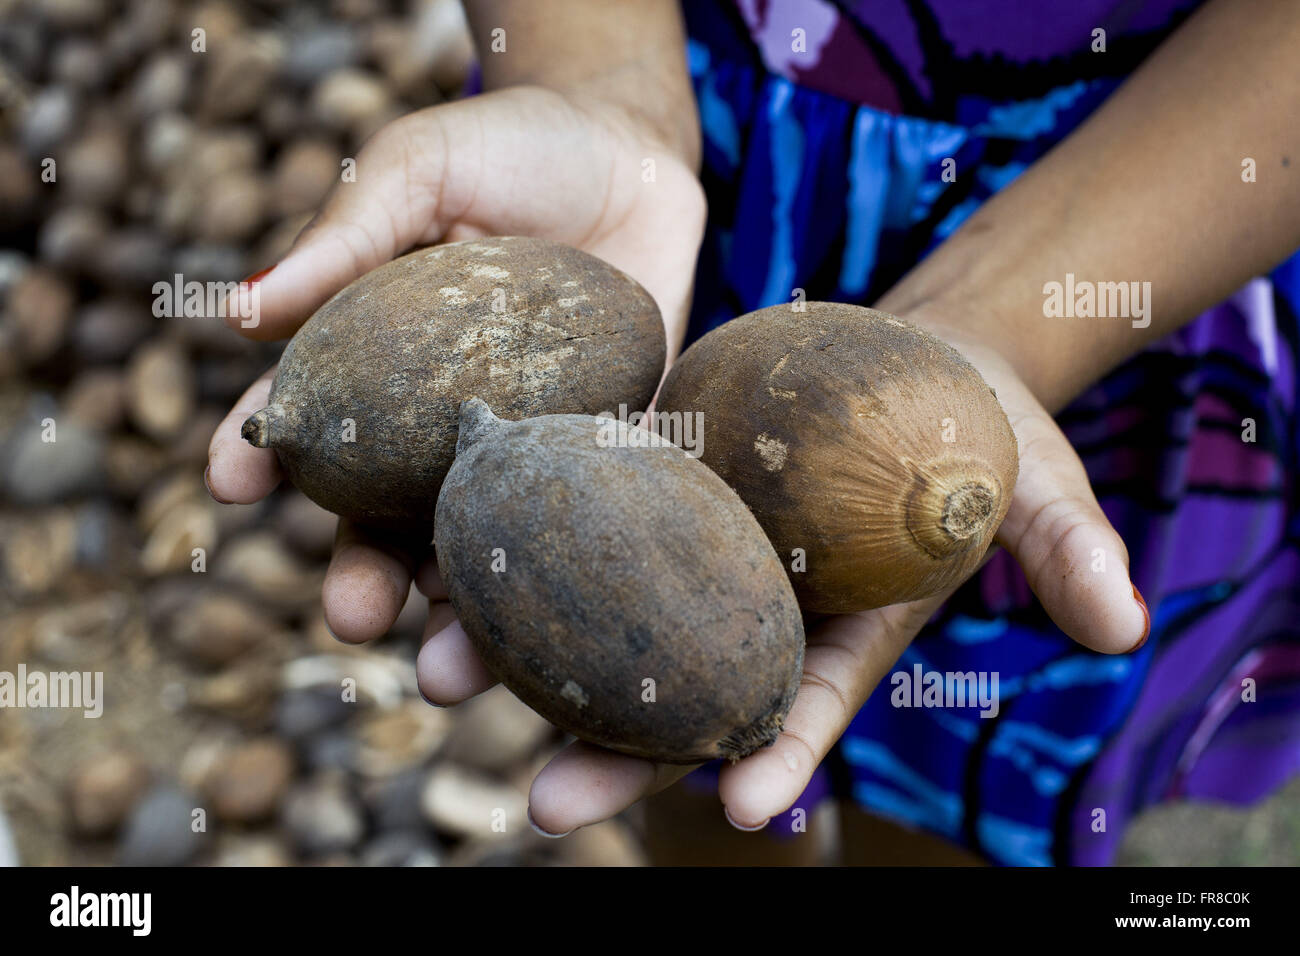 Detail of hands holding babassu coconut in the Parrot`s Beak region Stock Photo